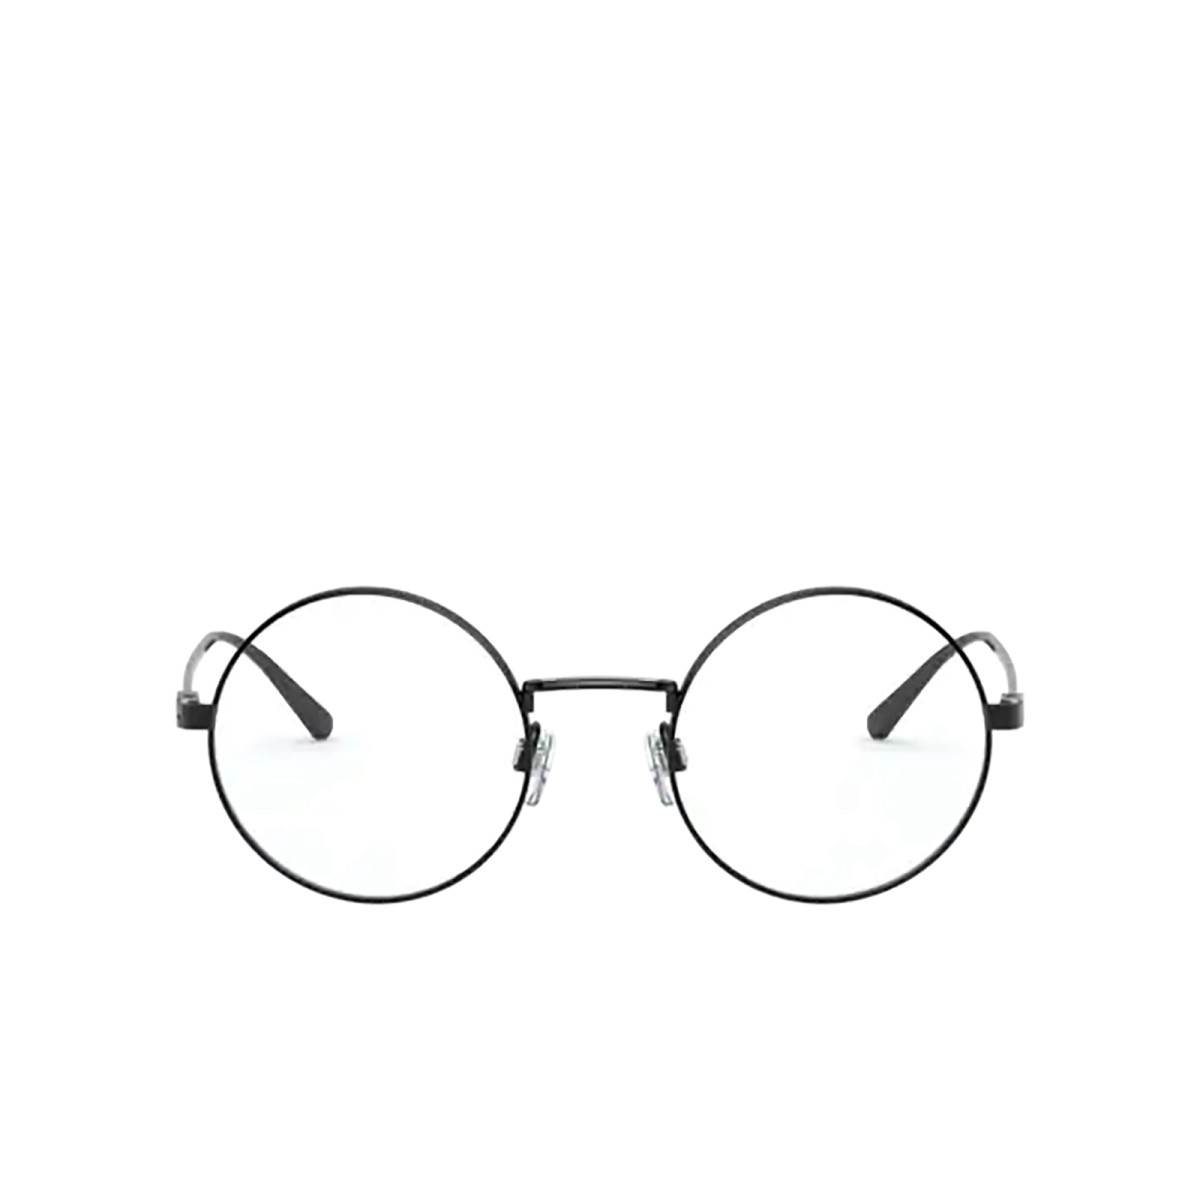 Ralph Lauren® Round Eyeglasses: RL5109 color 9003 Shiny Black - front view